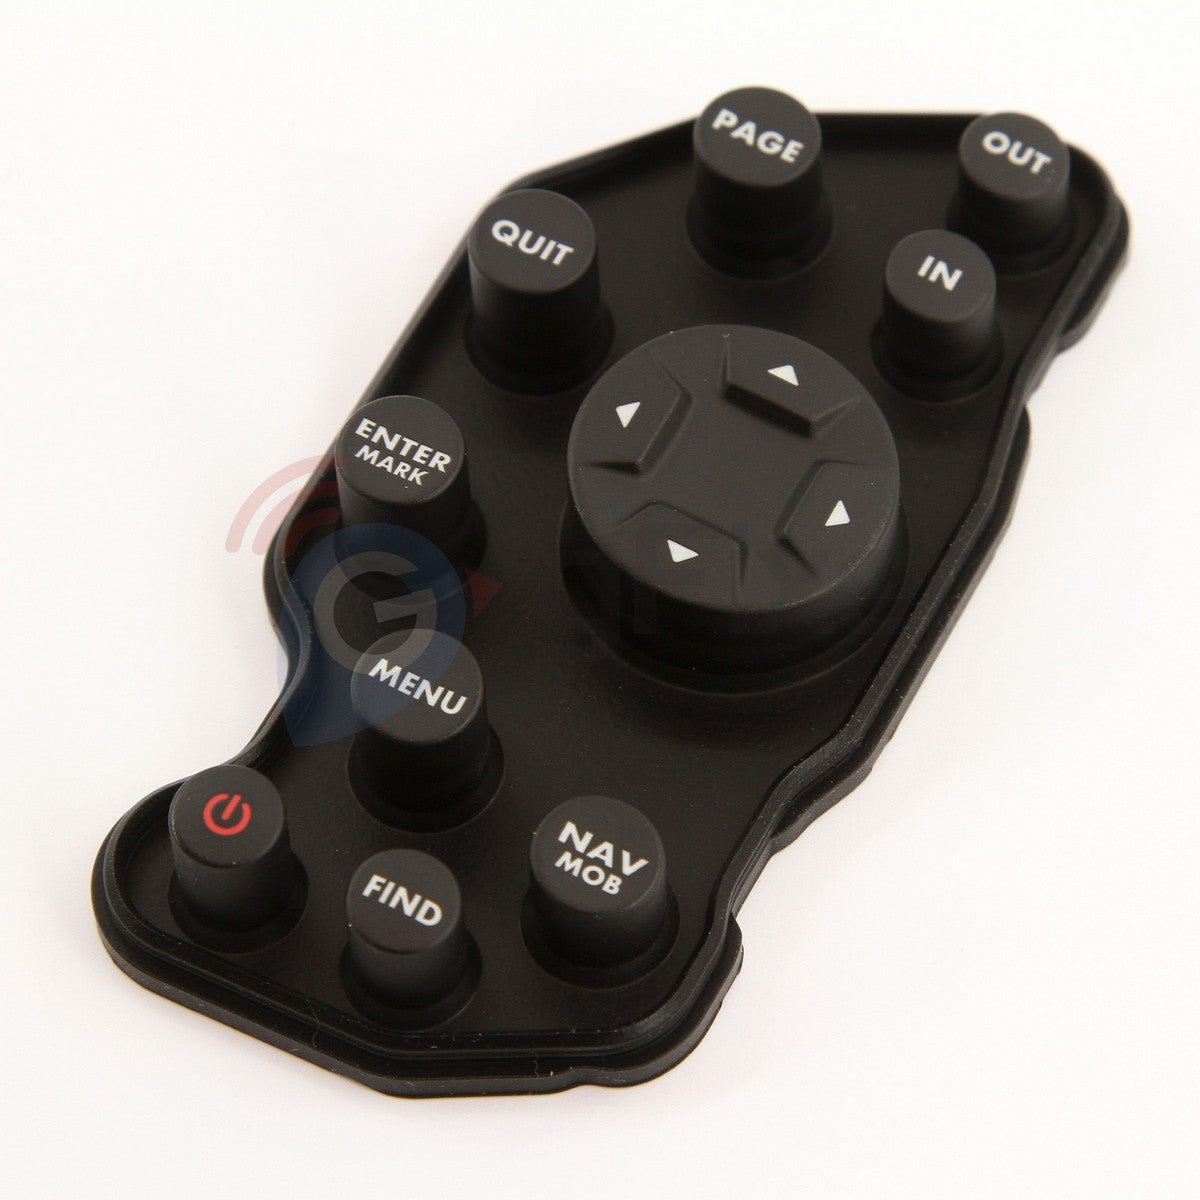 New Rubber button Garmin GPSMAP 276Cx part repair rubber